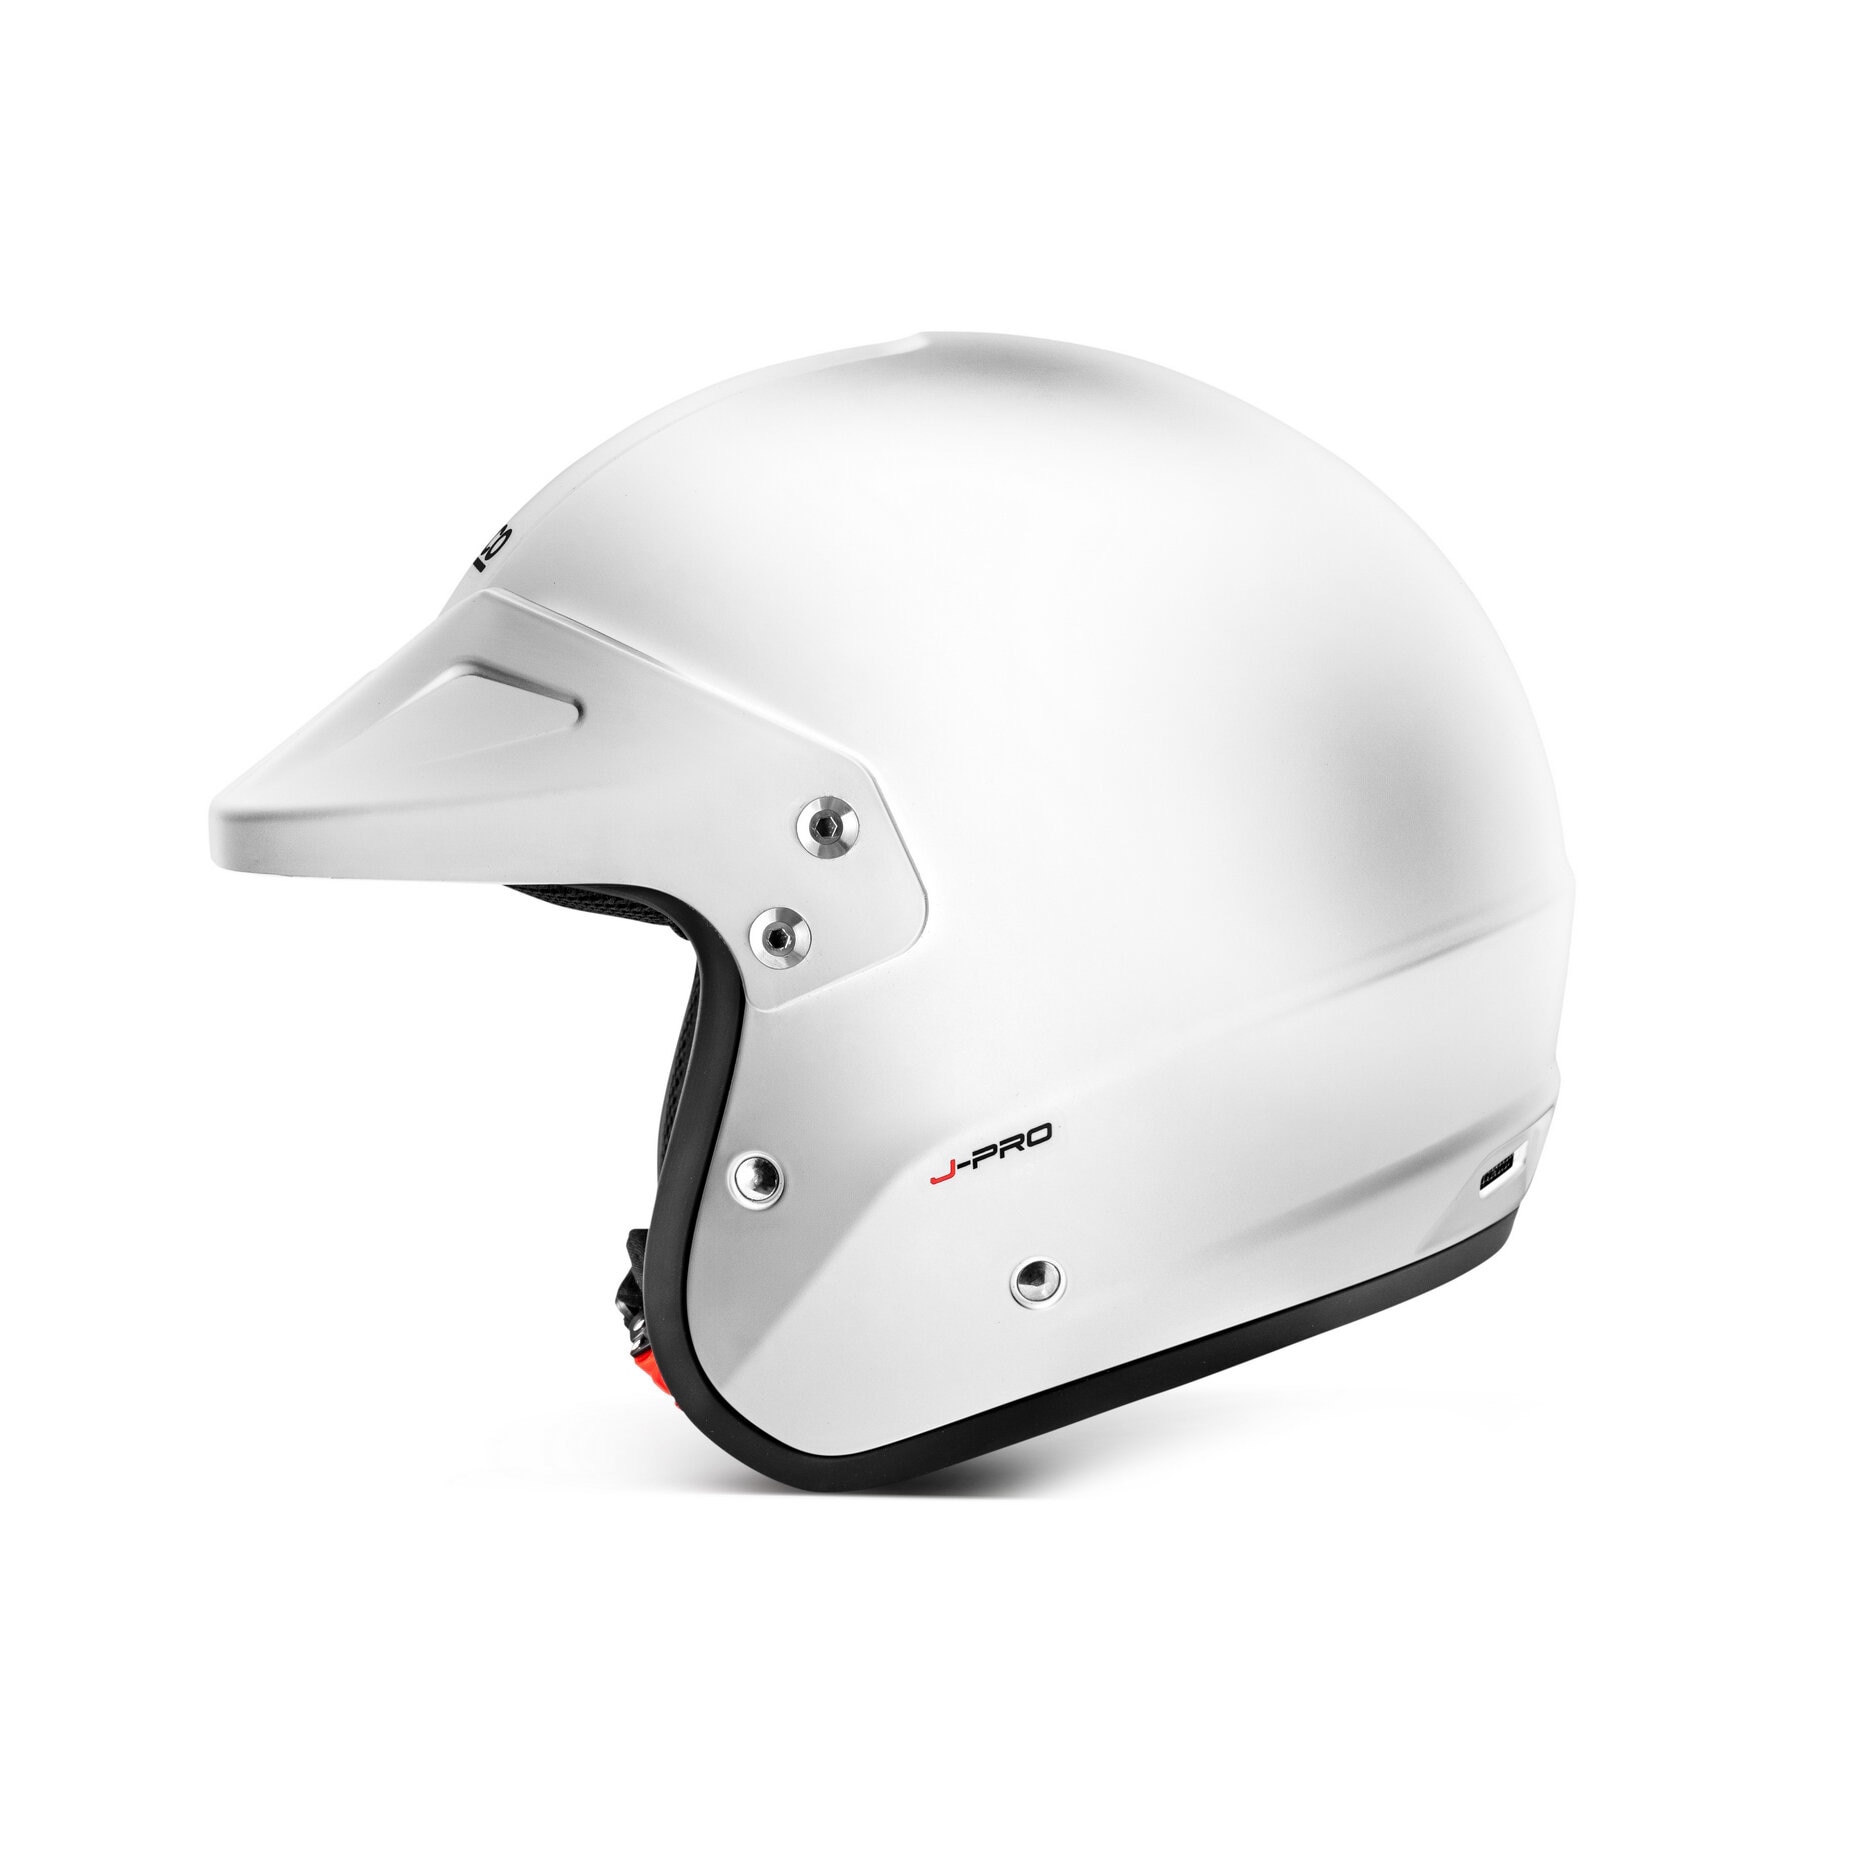 Helmet Sparco J-PRO White